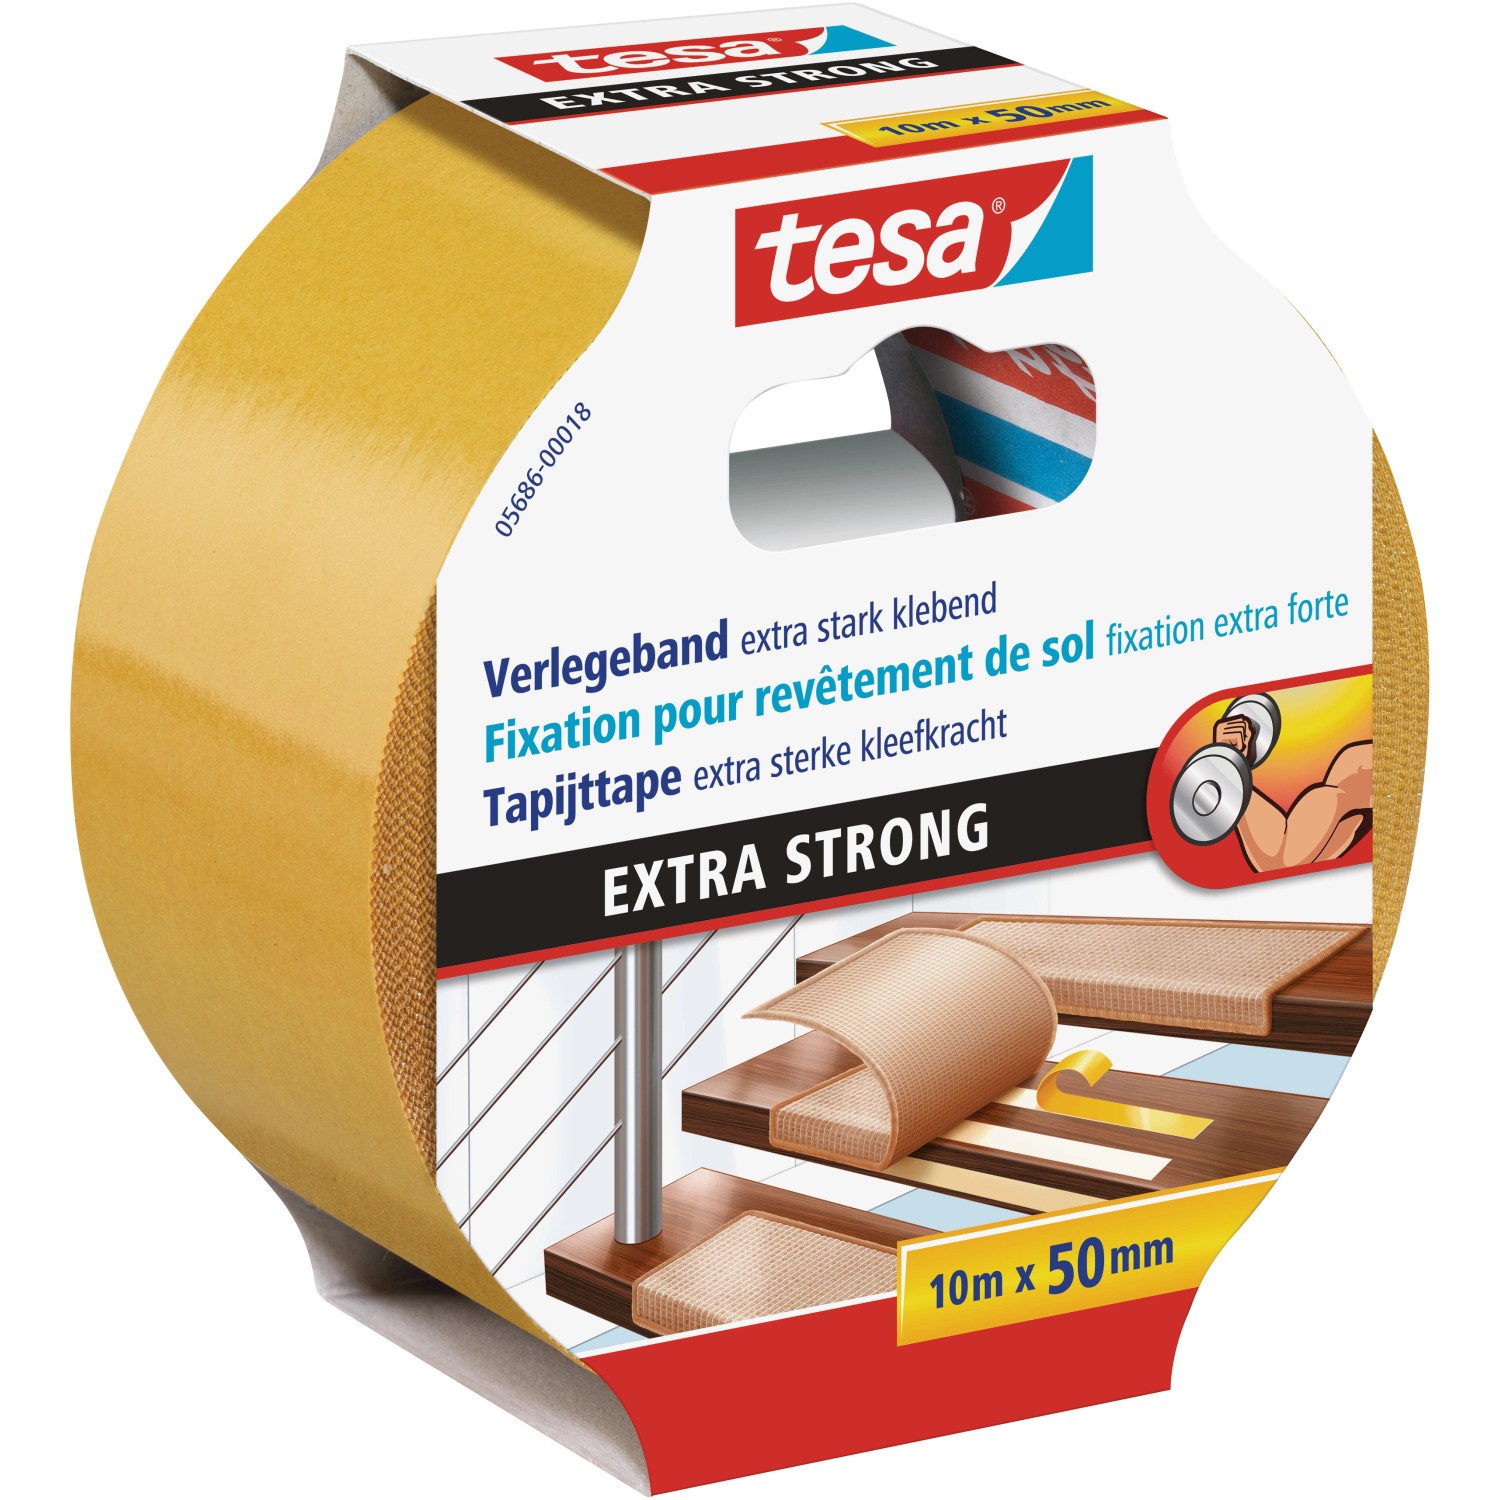 Tesa Verlegeband extra stark klebend 10 m x 50 mm